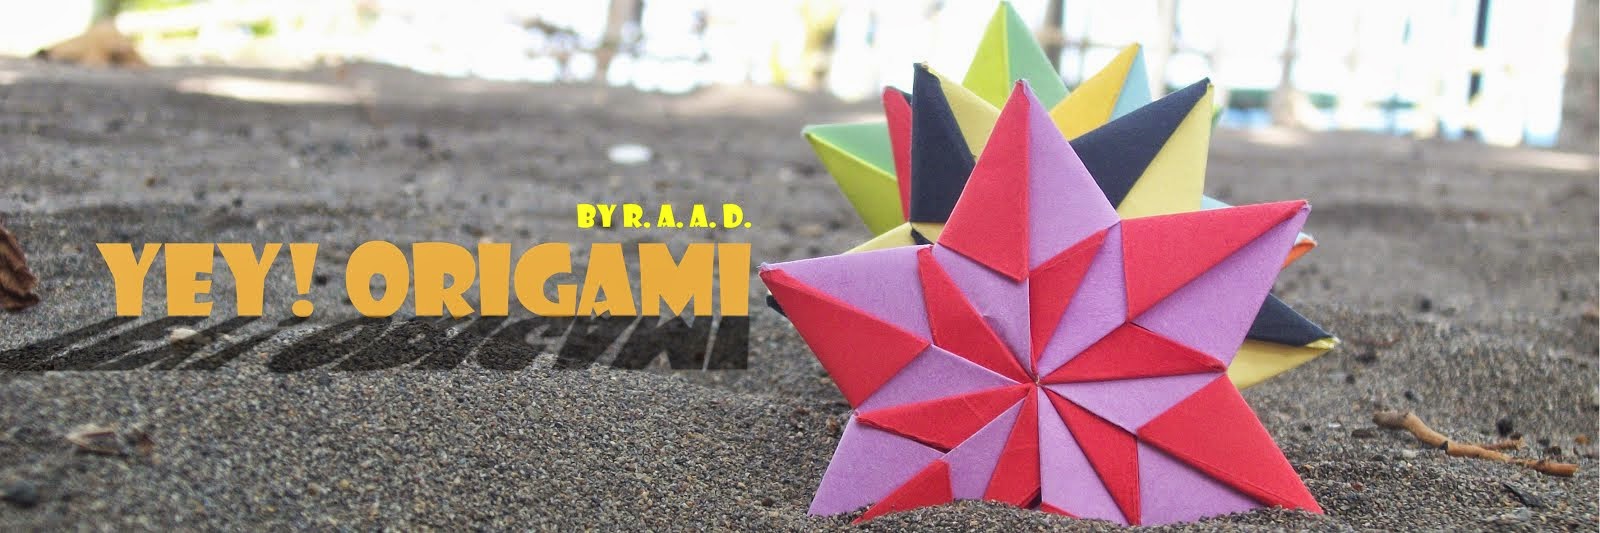 Yey! Origami